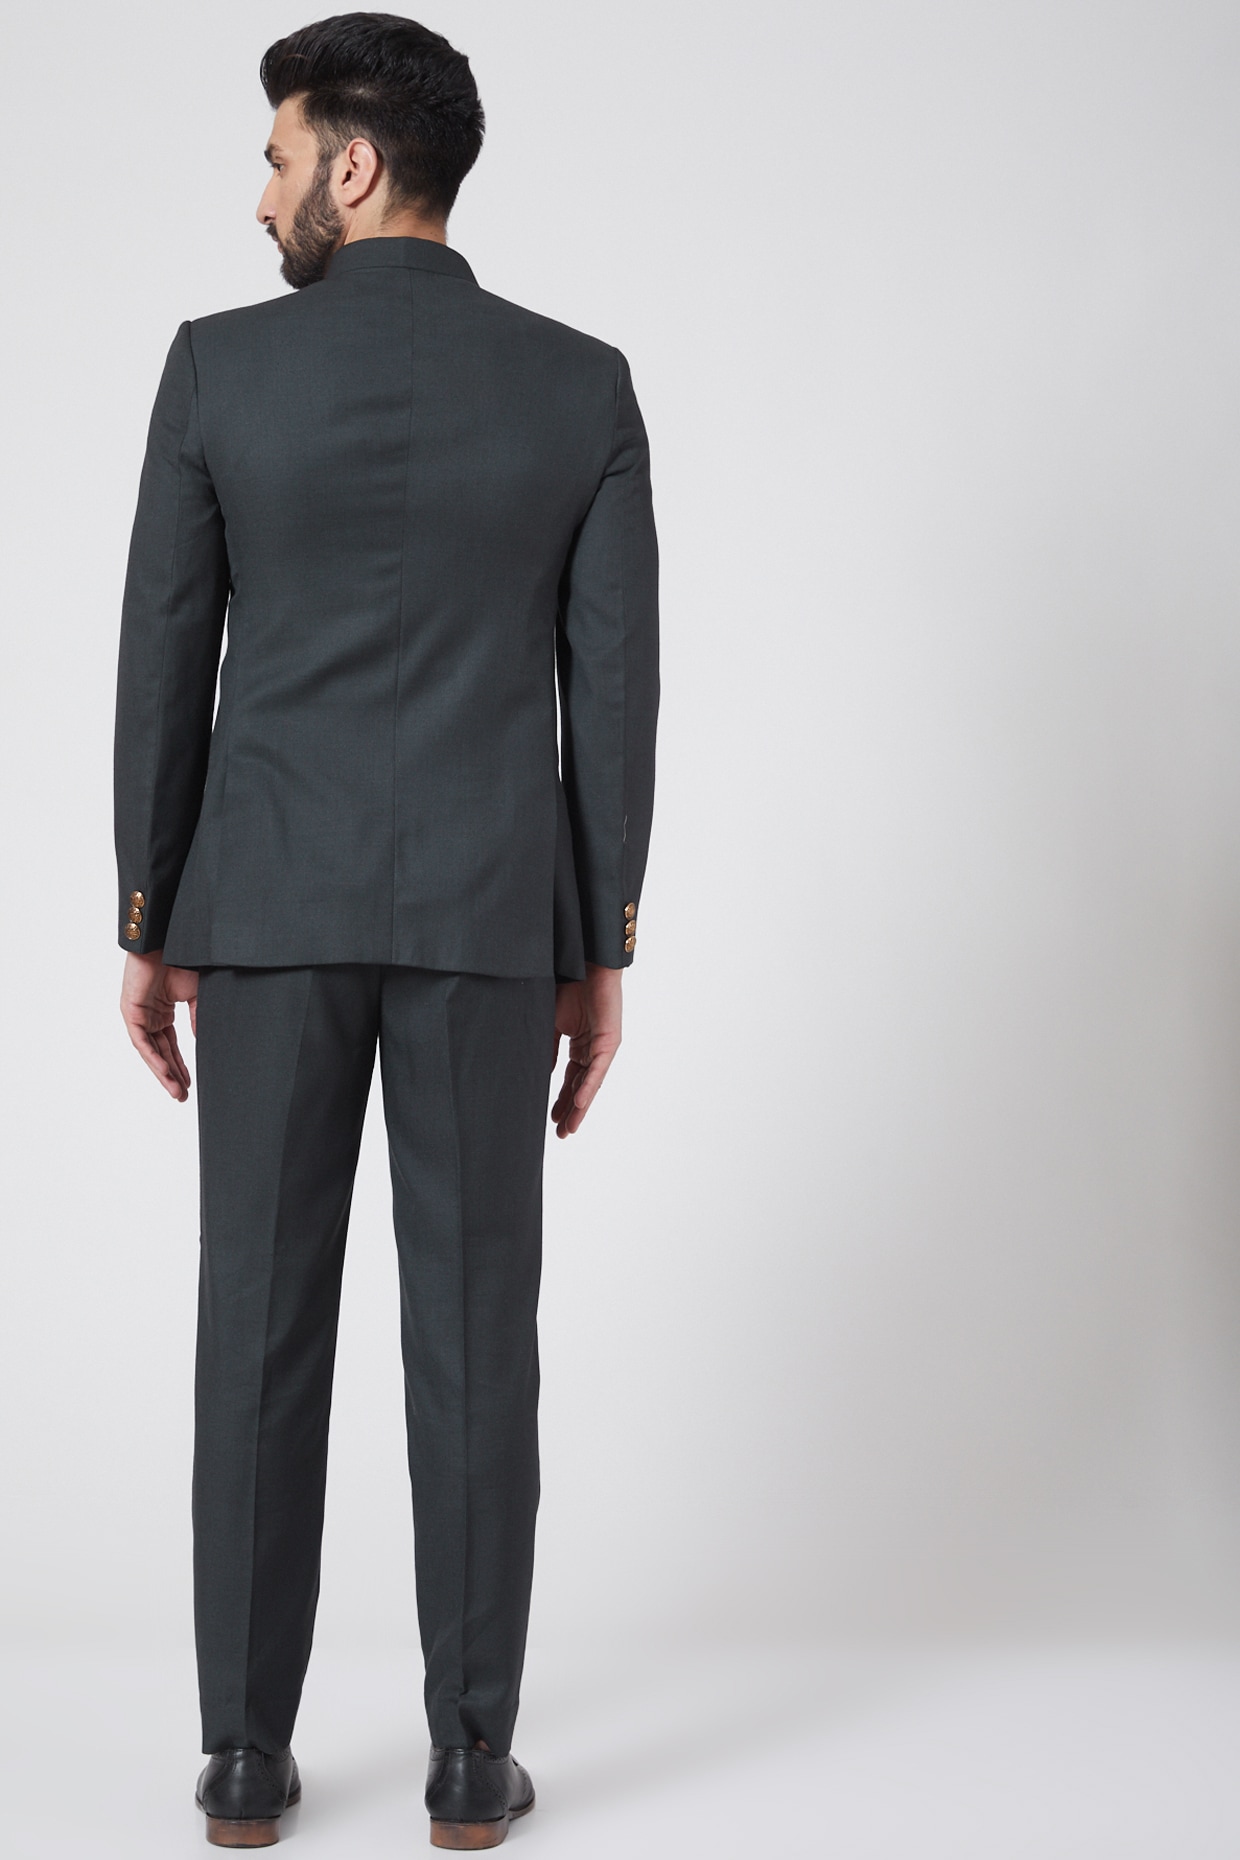 Shop Designer Green Bandhgala Suit For Wedding Online – Republic by Omar  Farooq